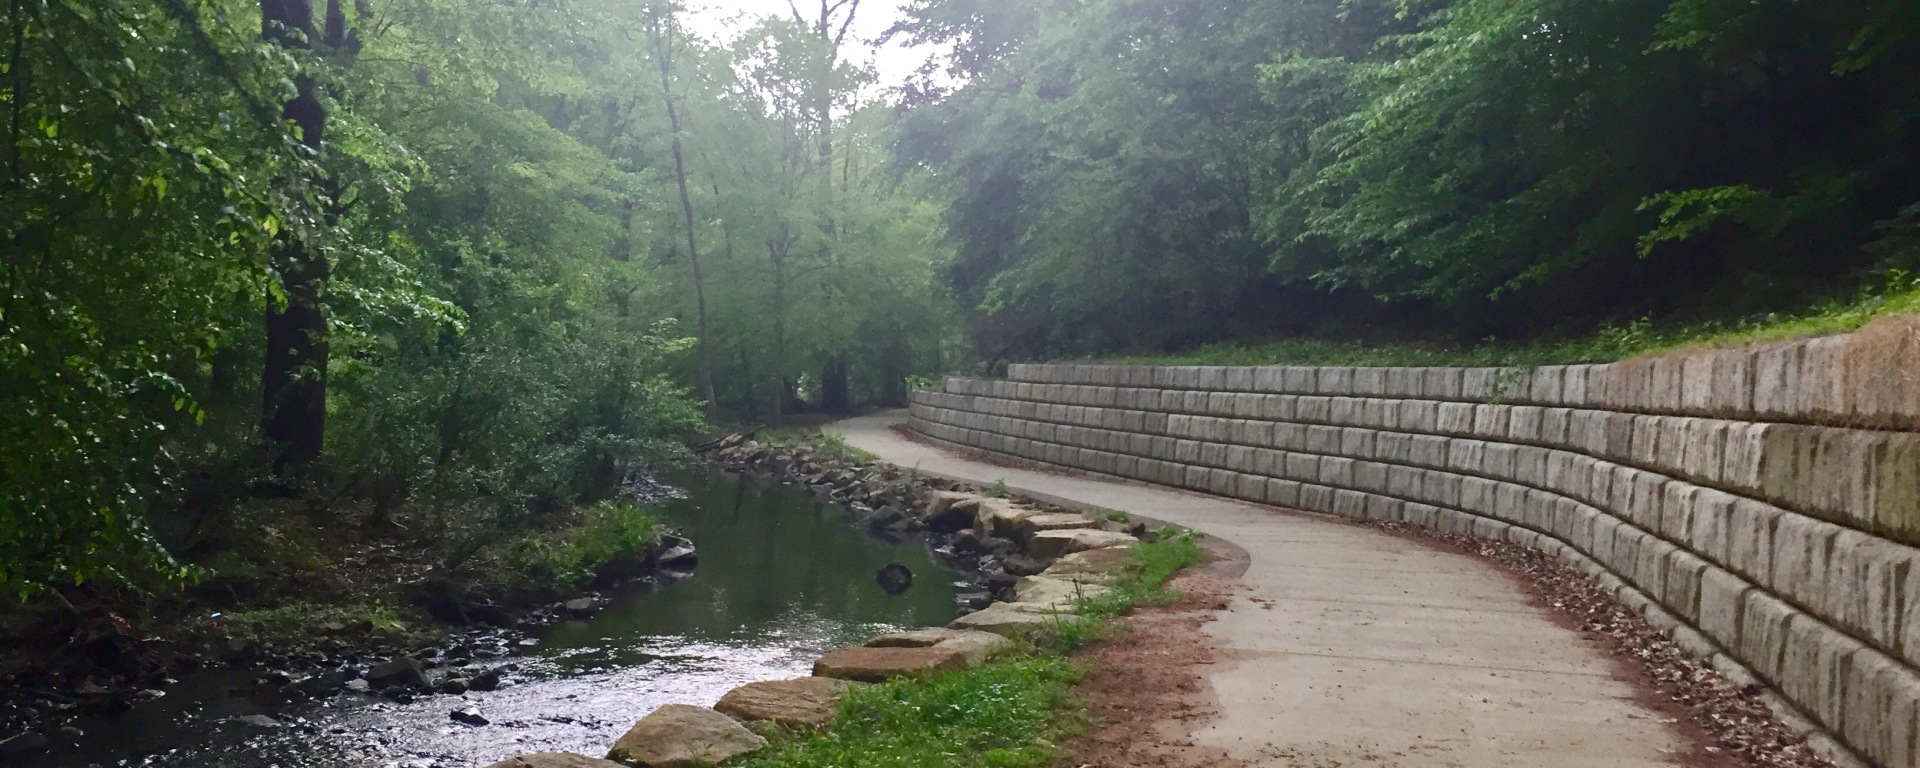 Bolin Creek Trail and Creek in Chapel Hill NC 